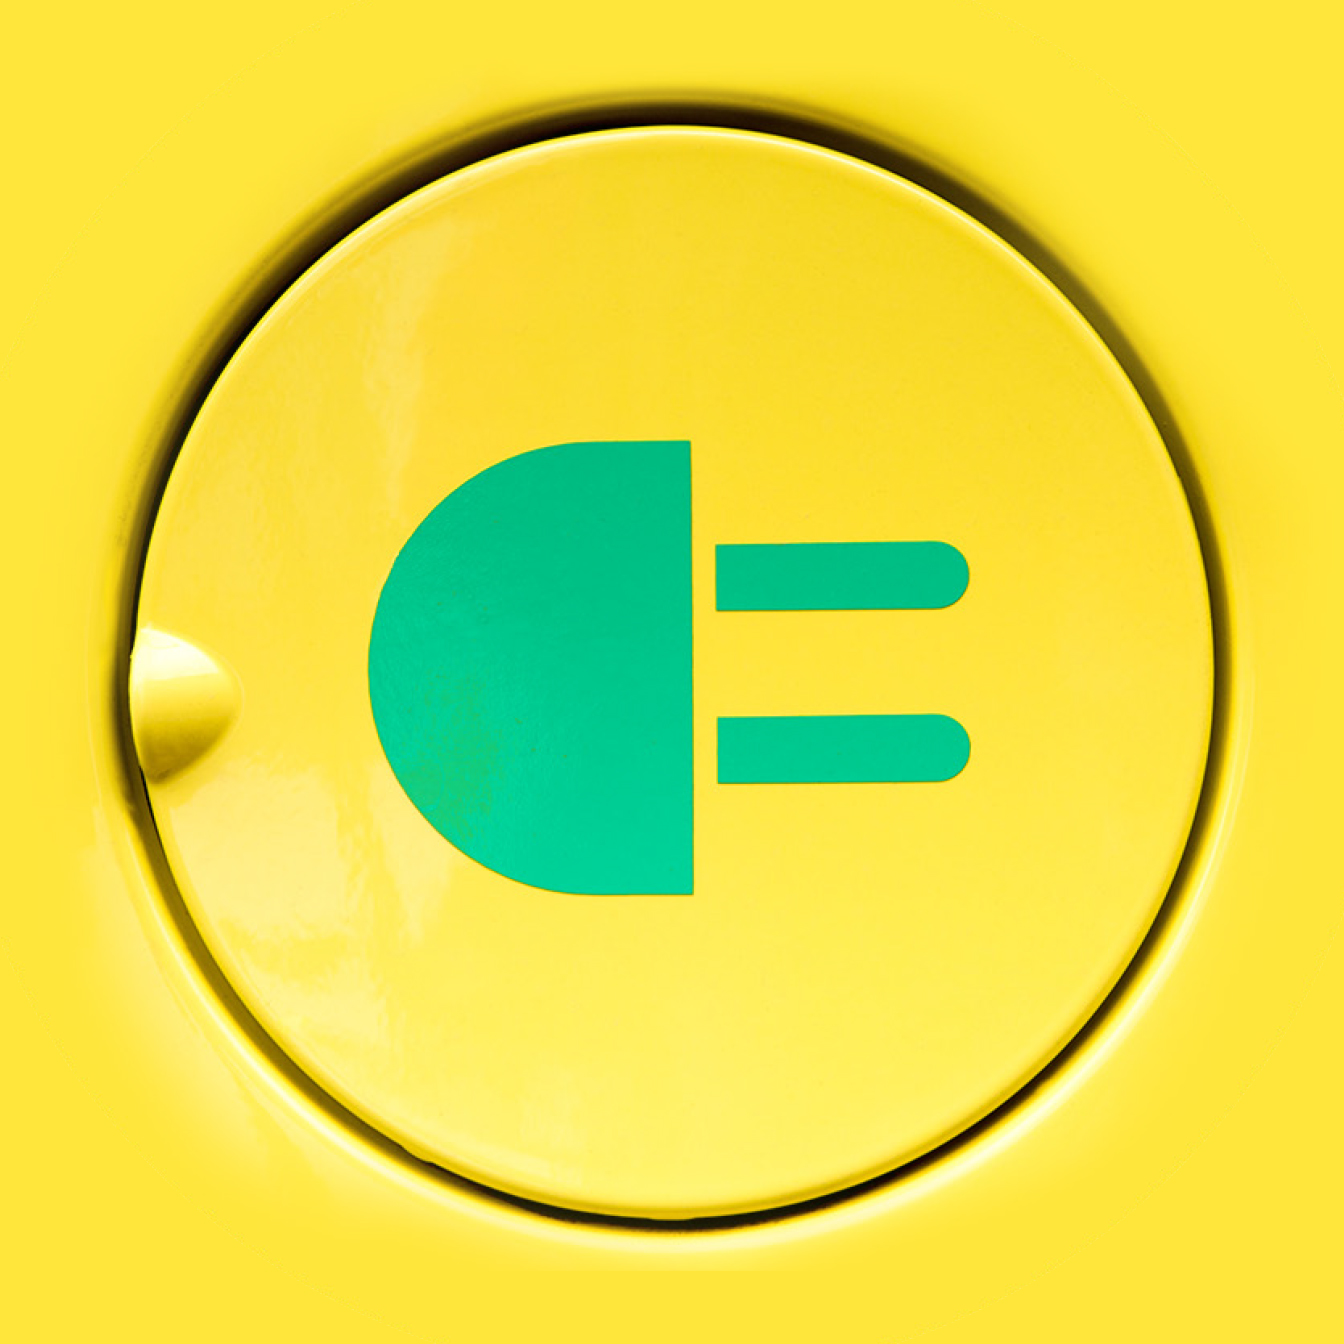 electric plug symbol on a fuel tank door